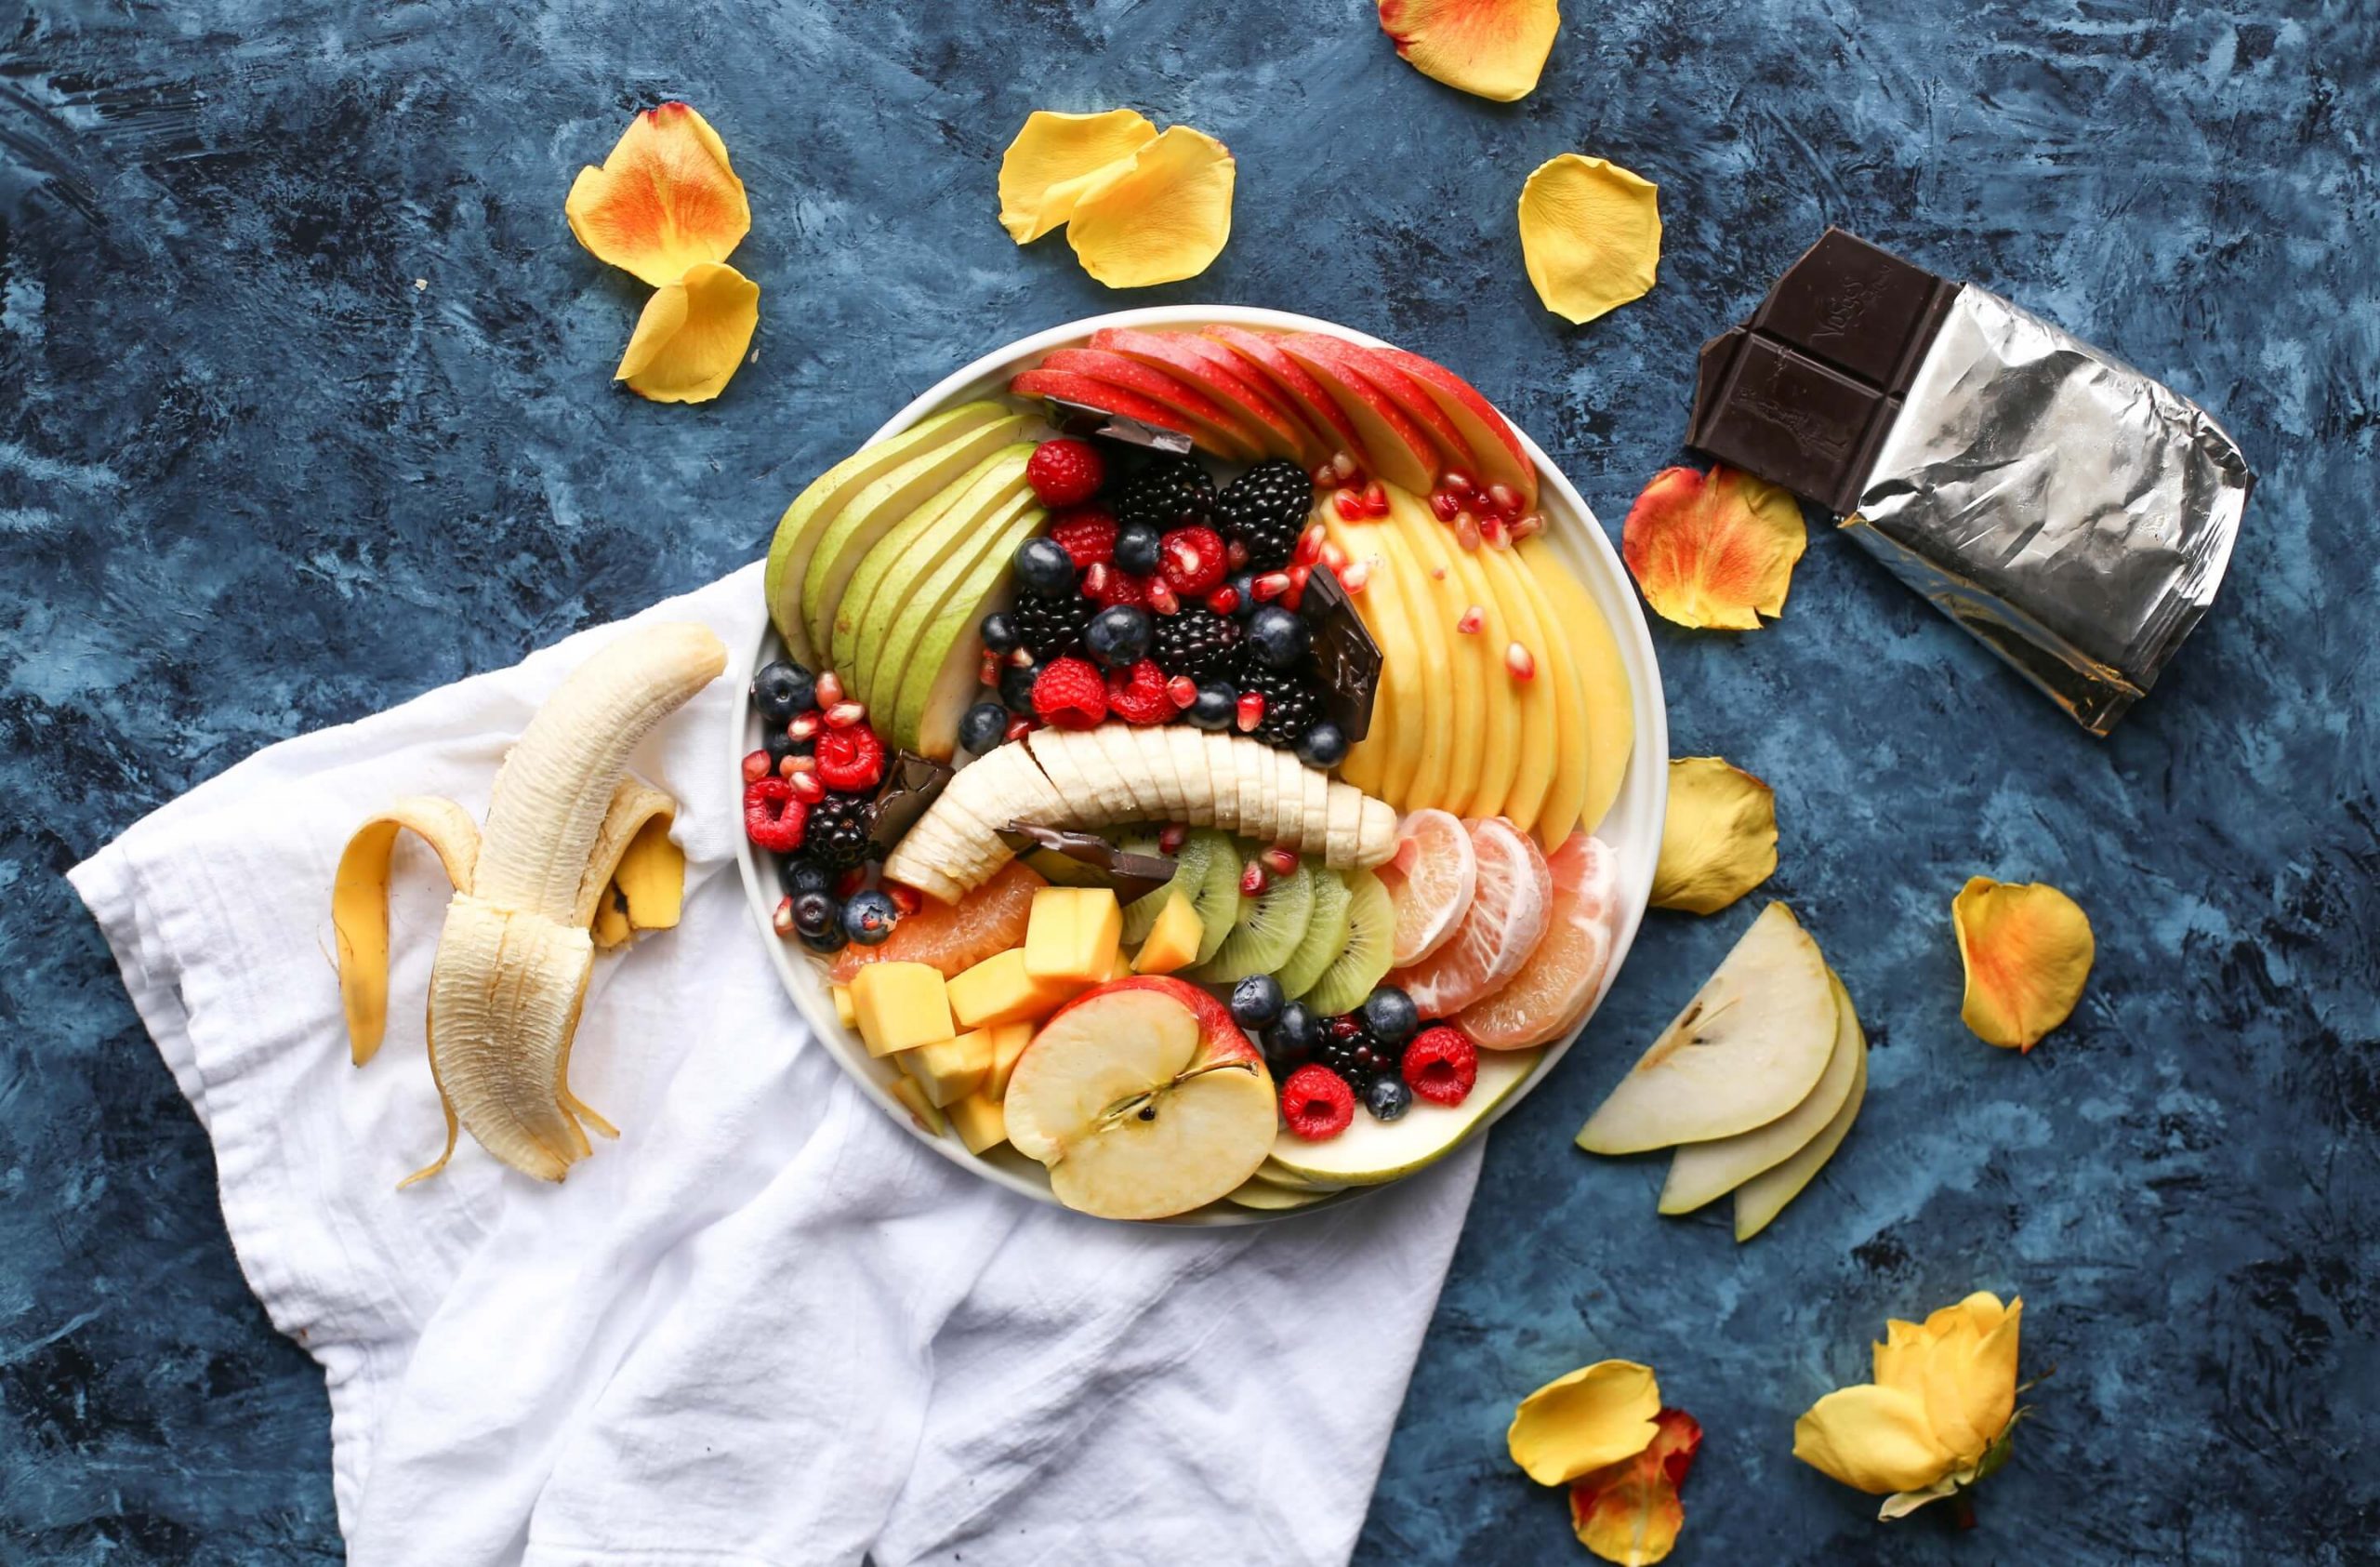 Fruit Platter with Banana, Mango, Berries and Orange